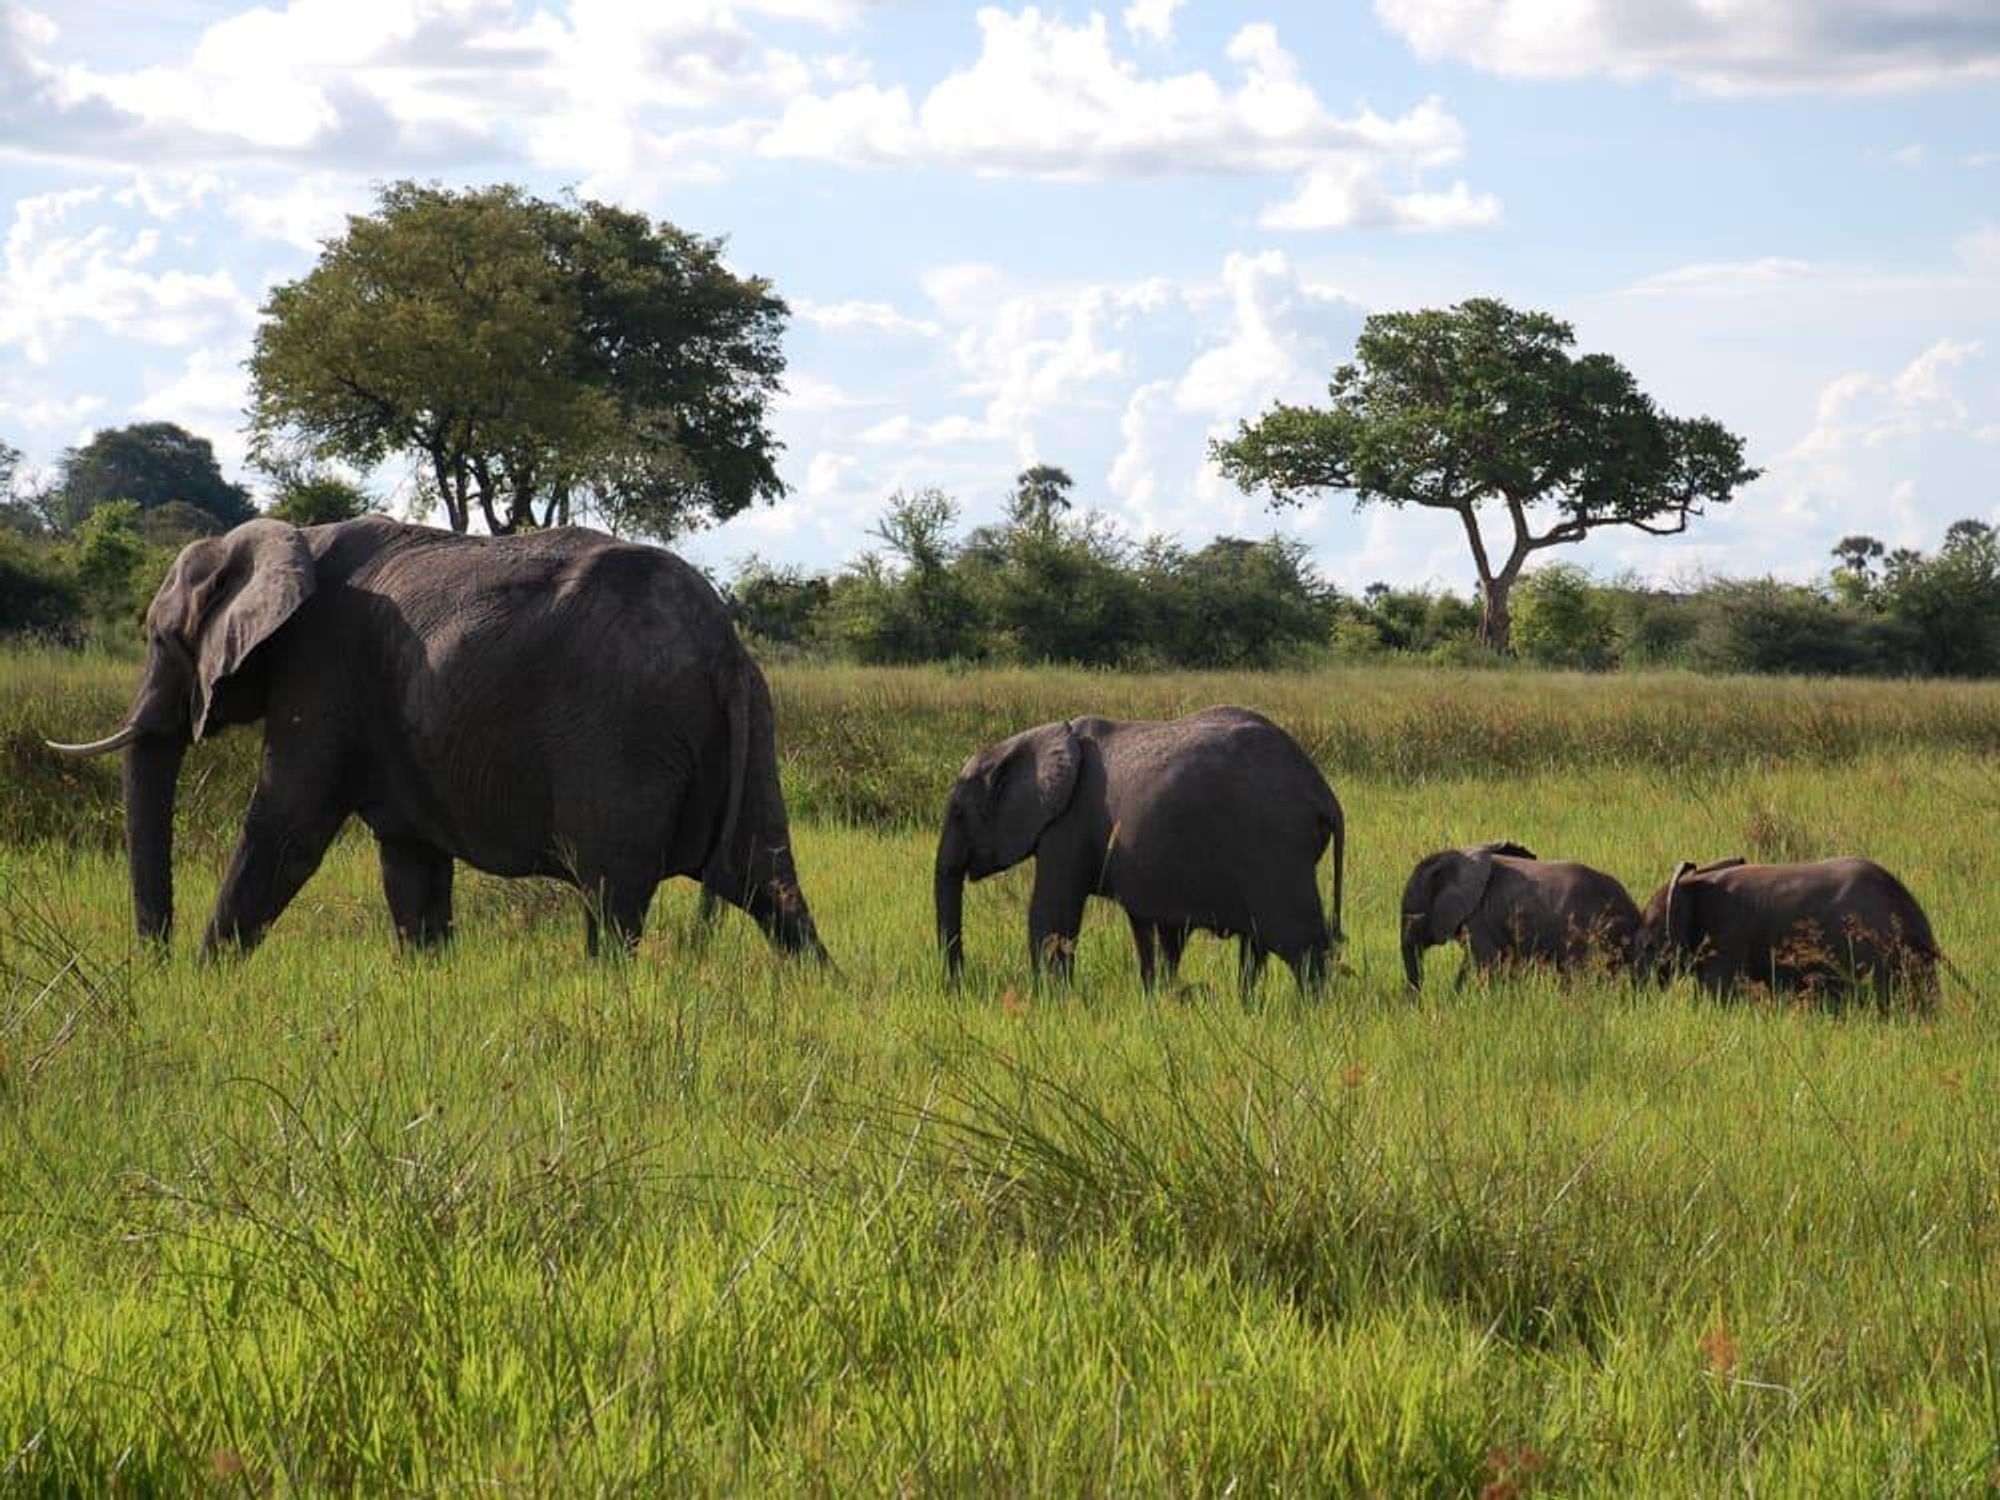 News_Lauren Levicki_Africa_elephant train